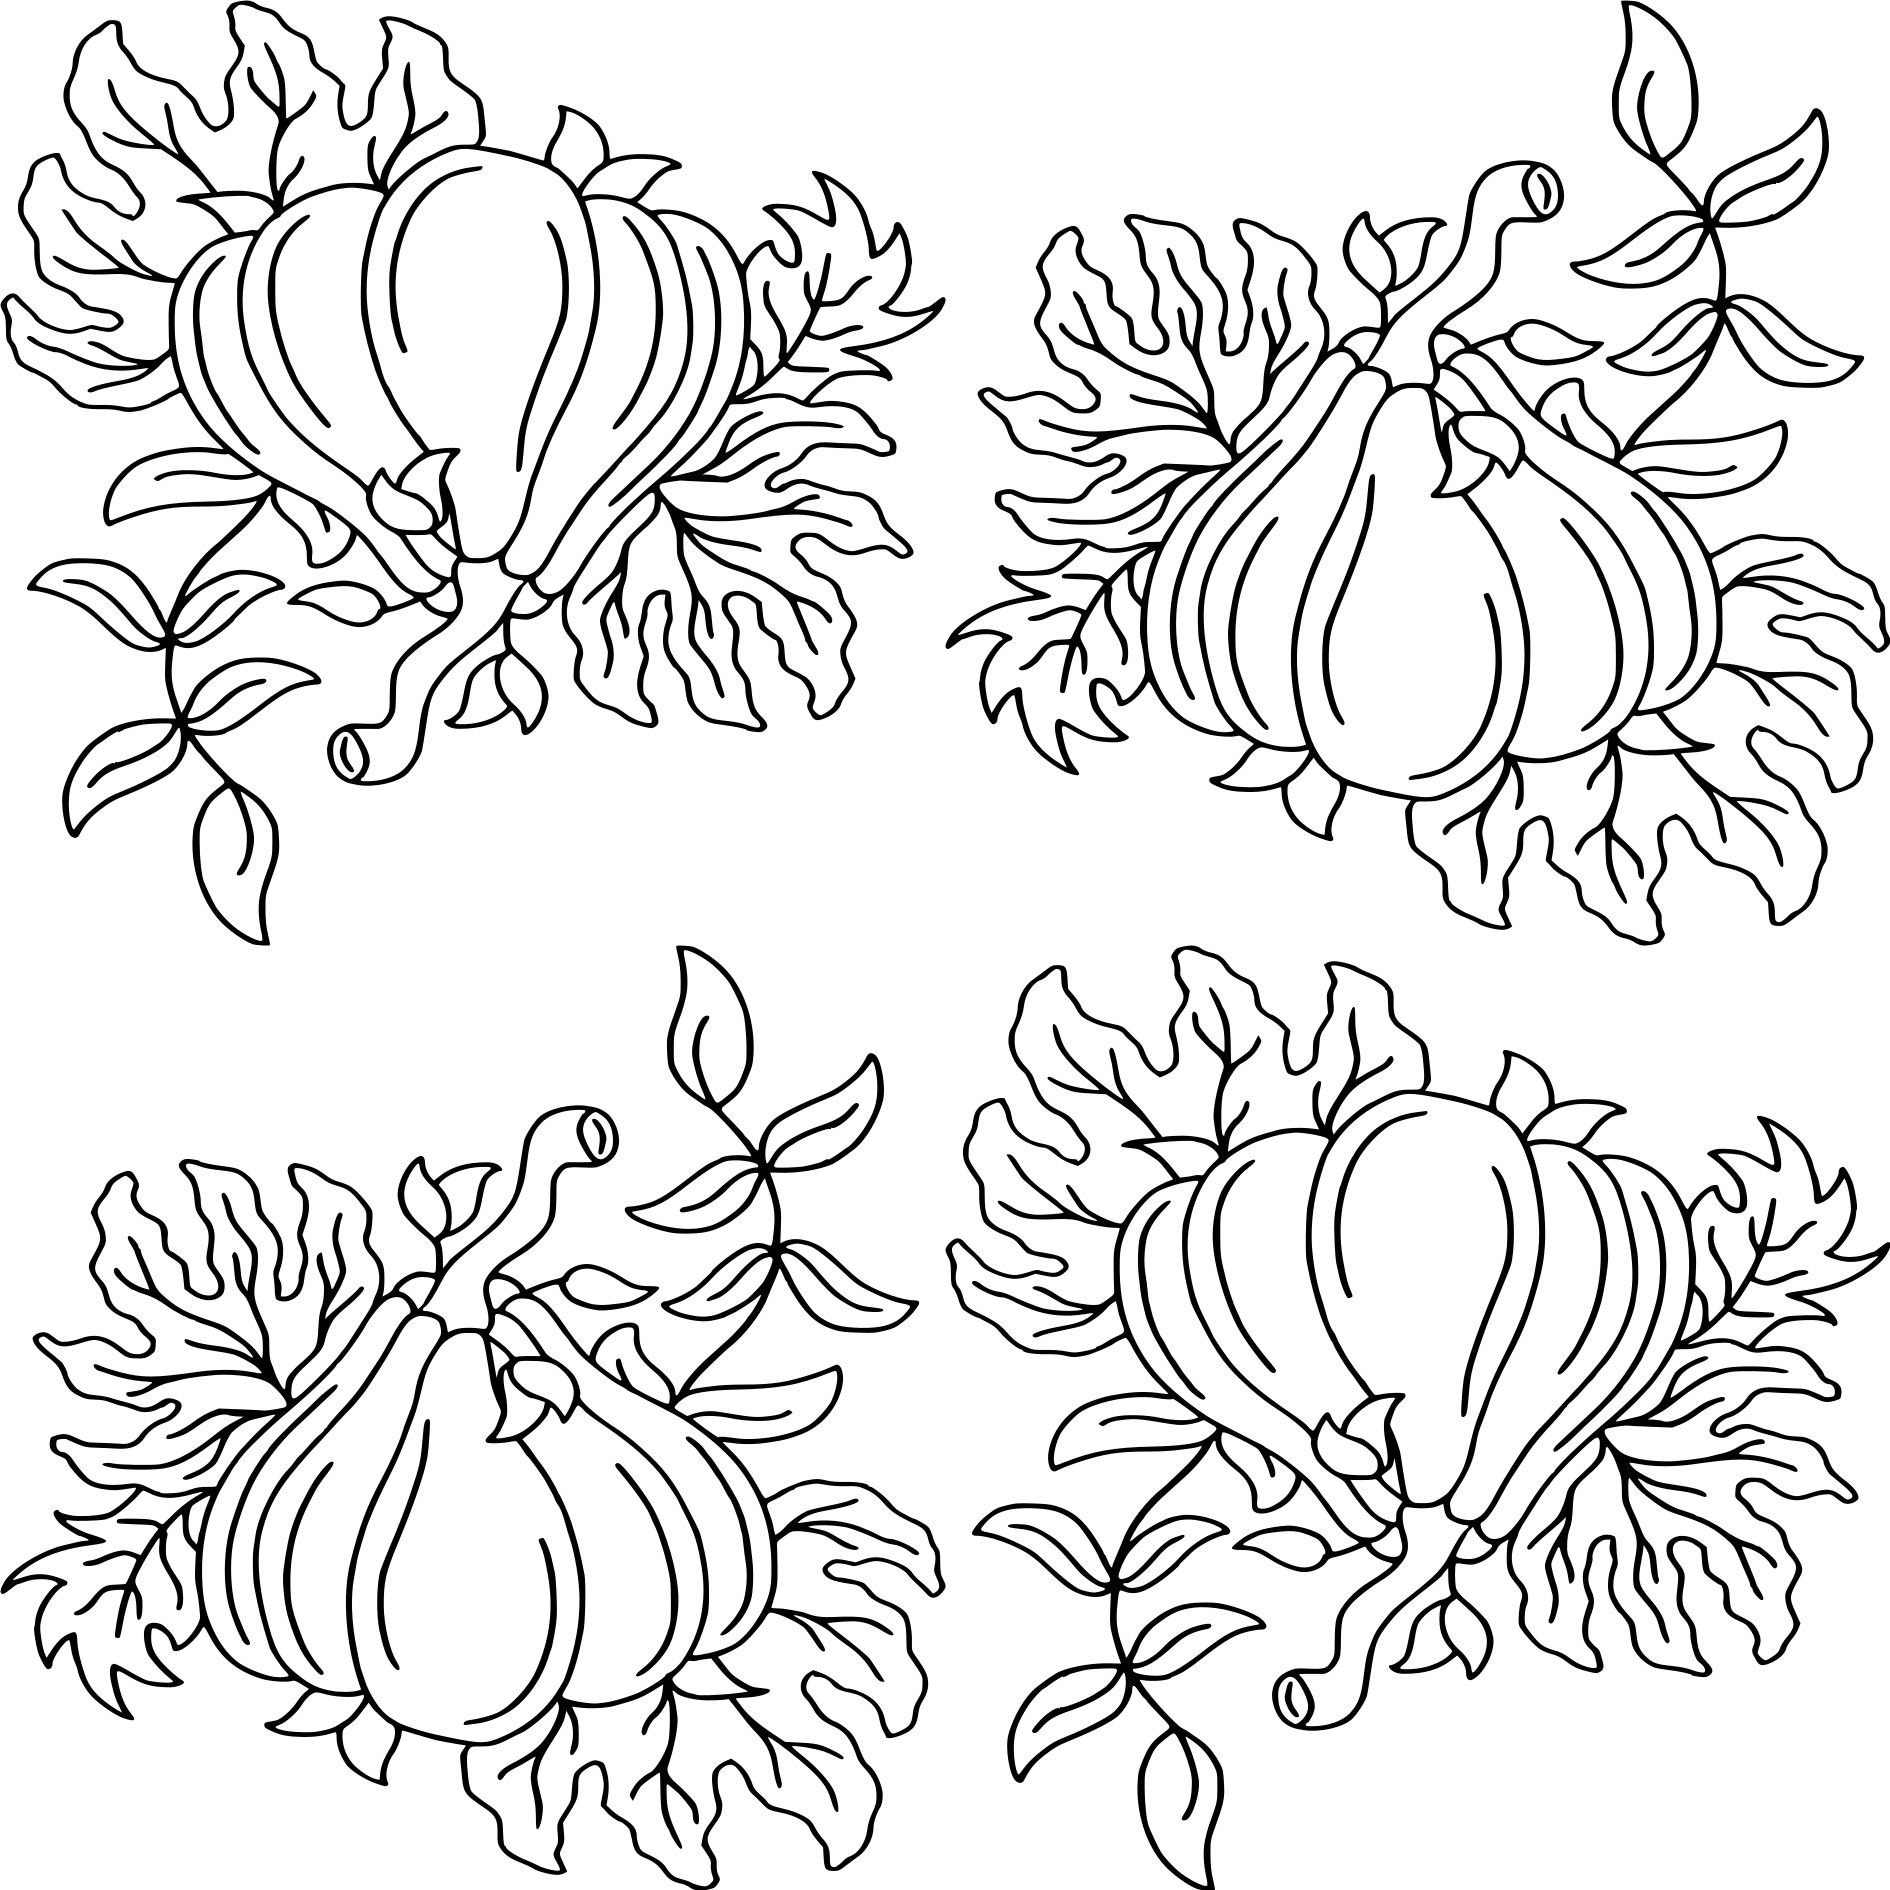 Pumpkin Pattern Design by Artist Sharon Godwin www.sgodwinstudio.co.uk